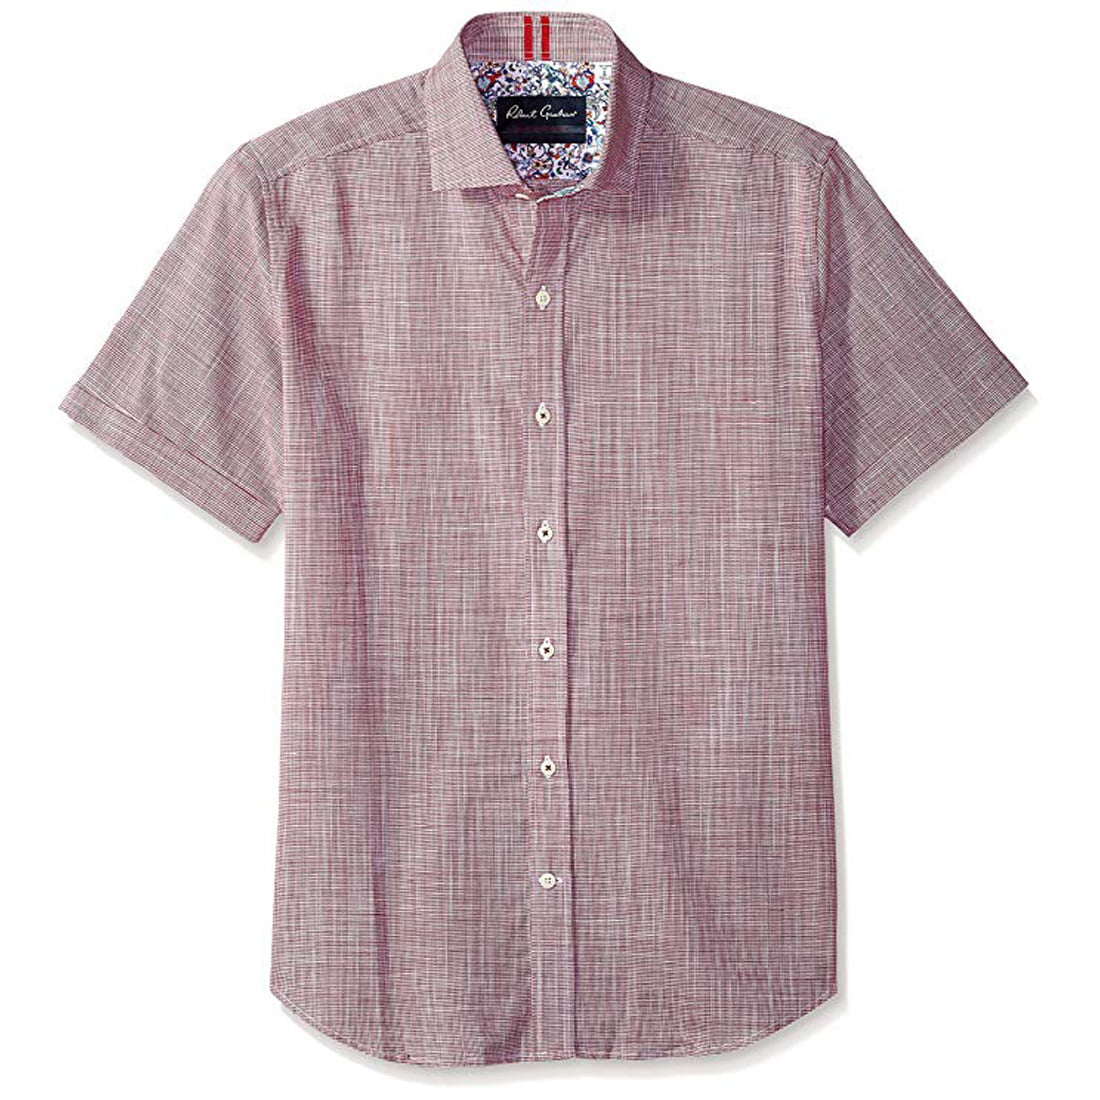 MSRP $138 Details about   Robert Graham Isaiah Tailored Short Sleeve Shirt Men's Size L Blue